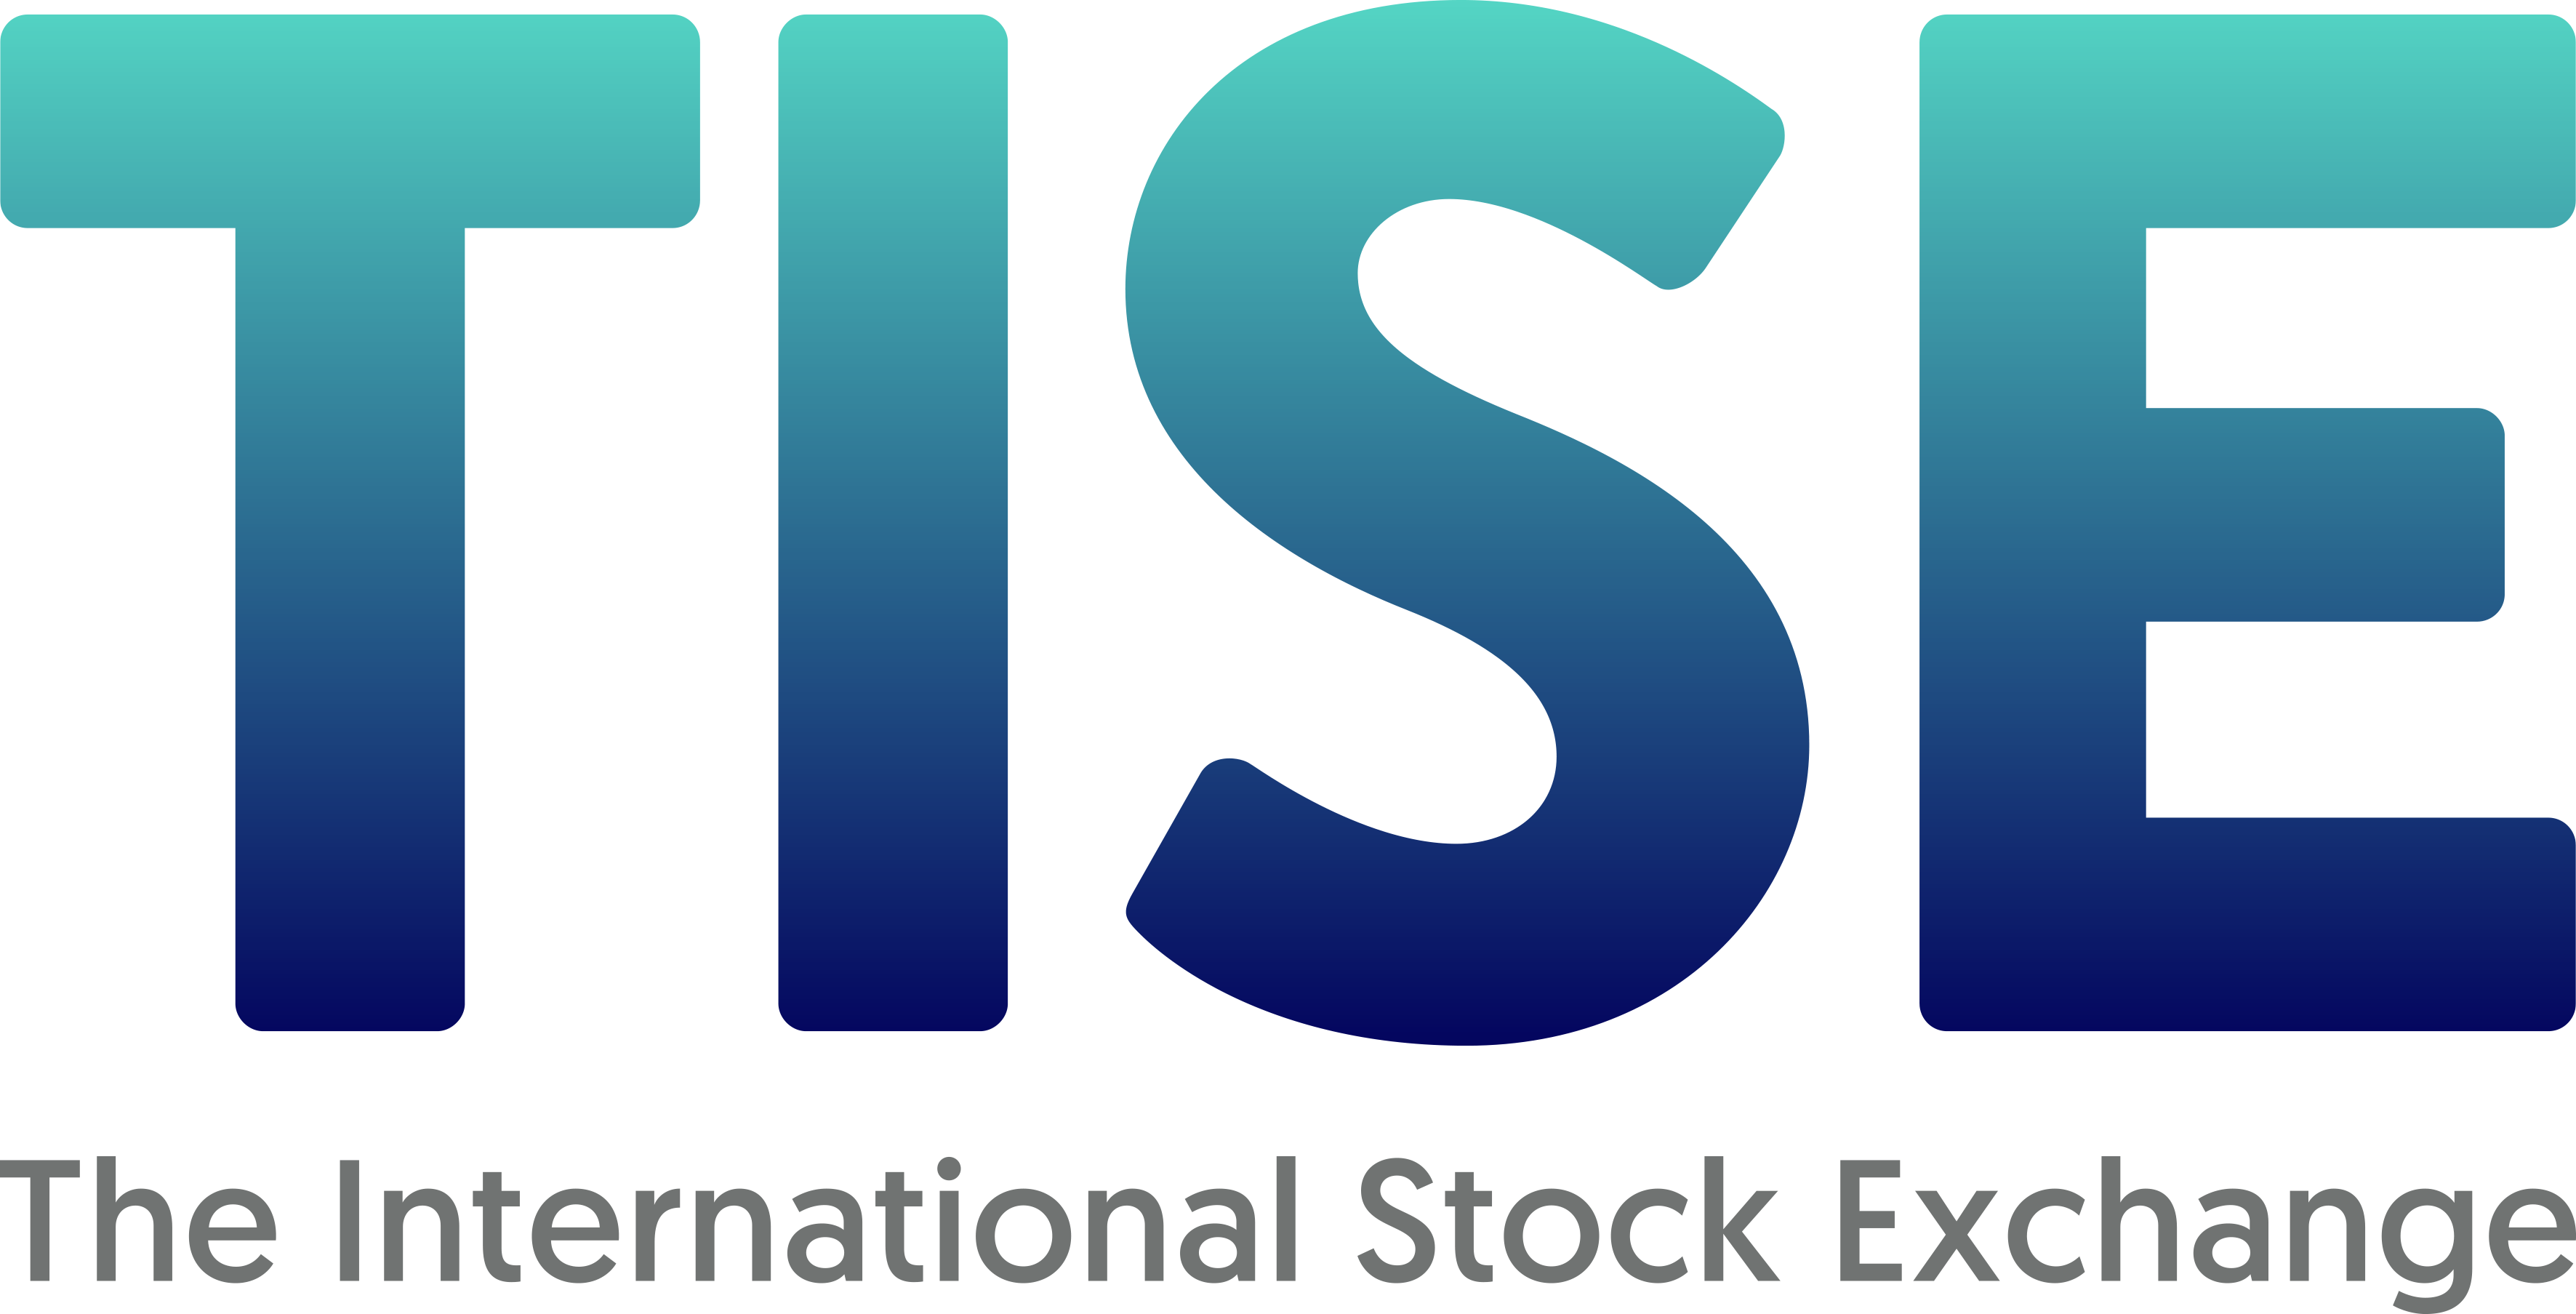 The International Stock Exchange